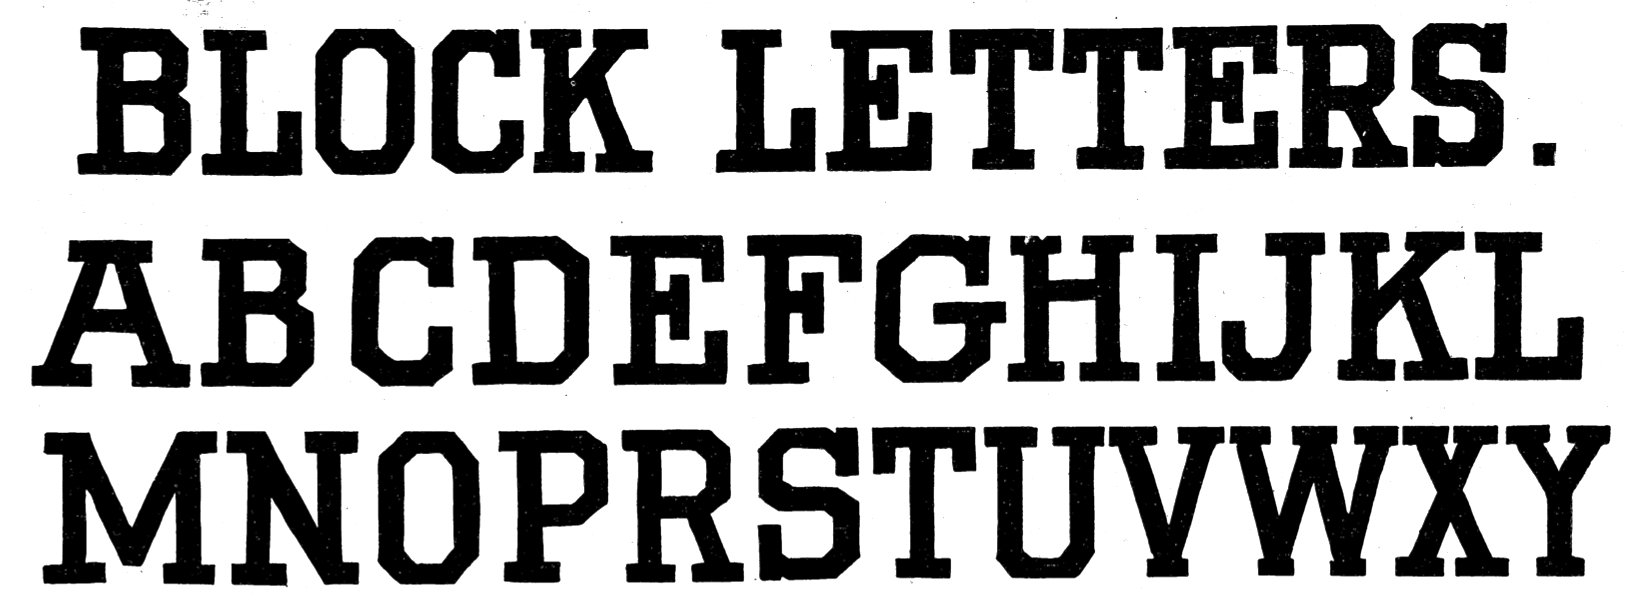 block-lettering-font-template-business